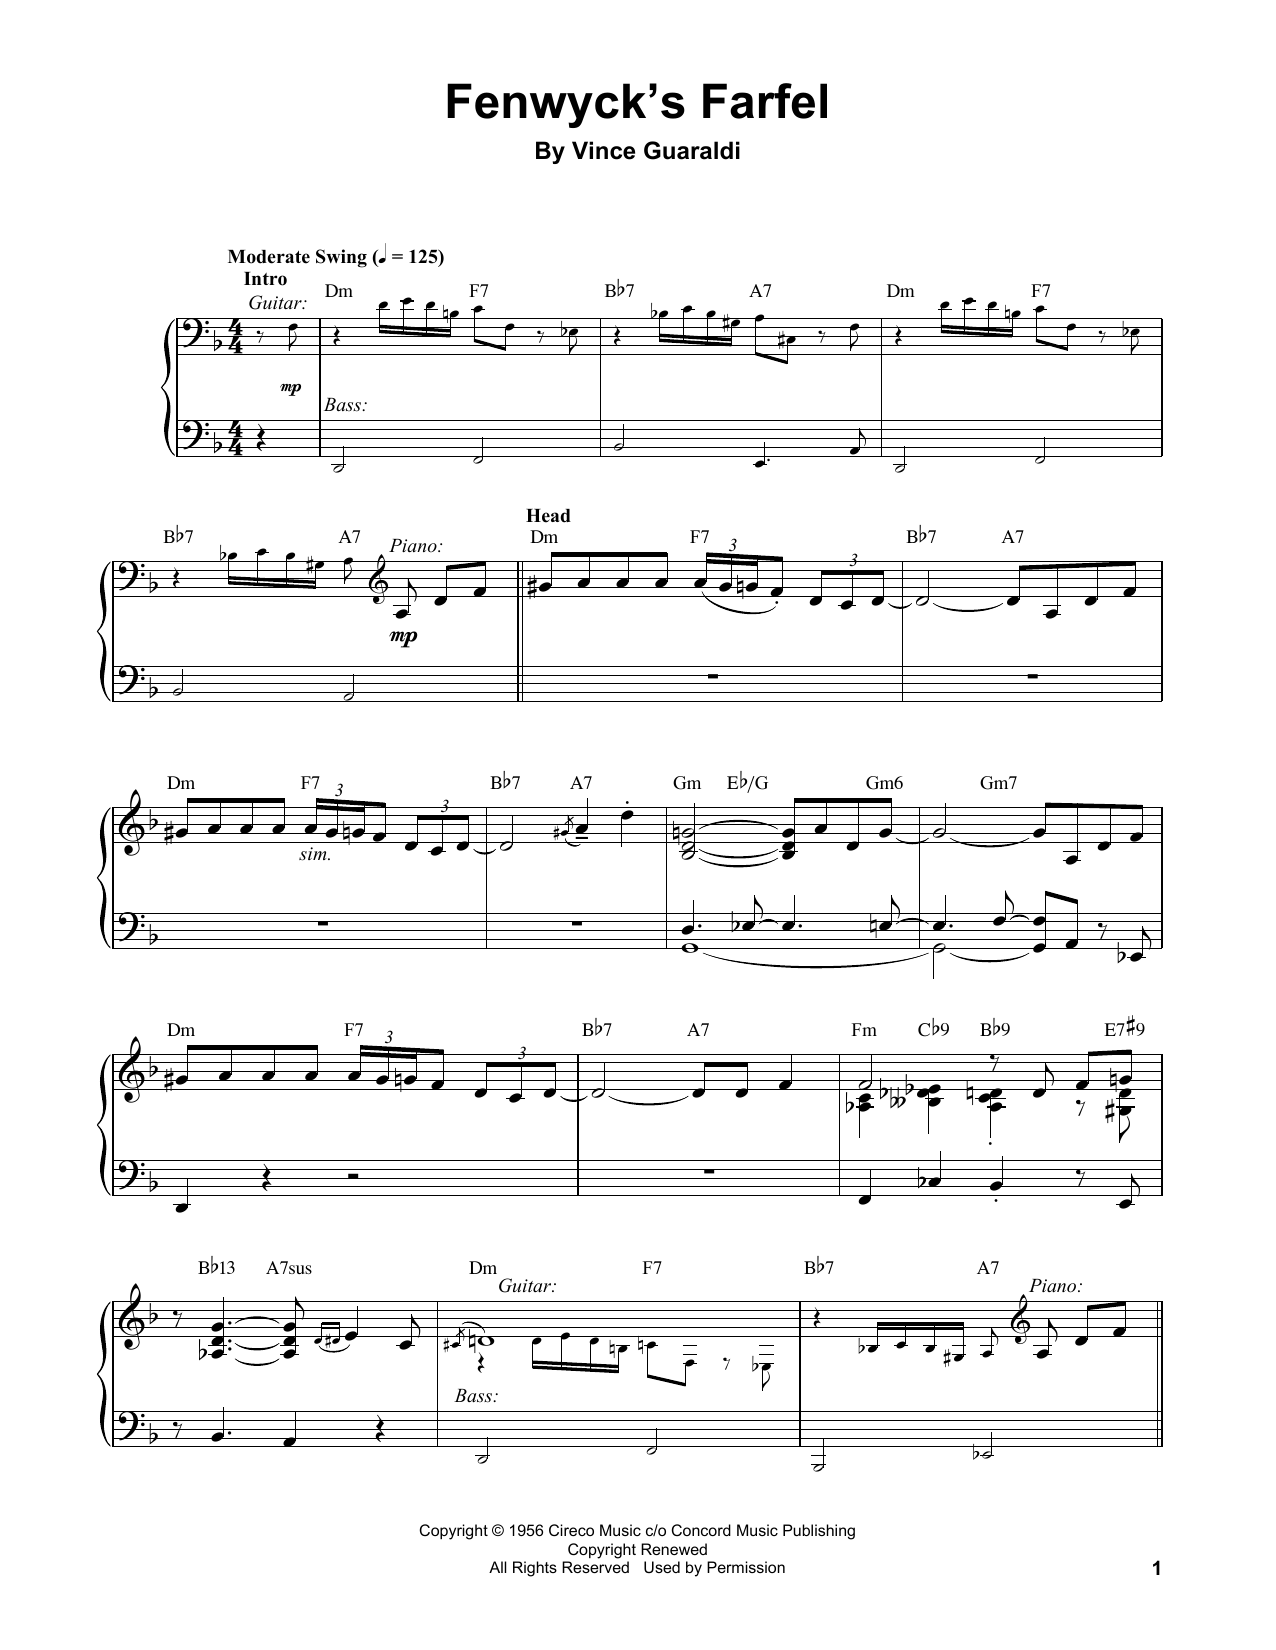 Vince Guaraldi Fenwyck's Farfel Sheet Music Notes & Chords for Piano Transcription - Download or Print PDF